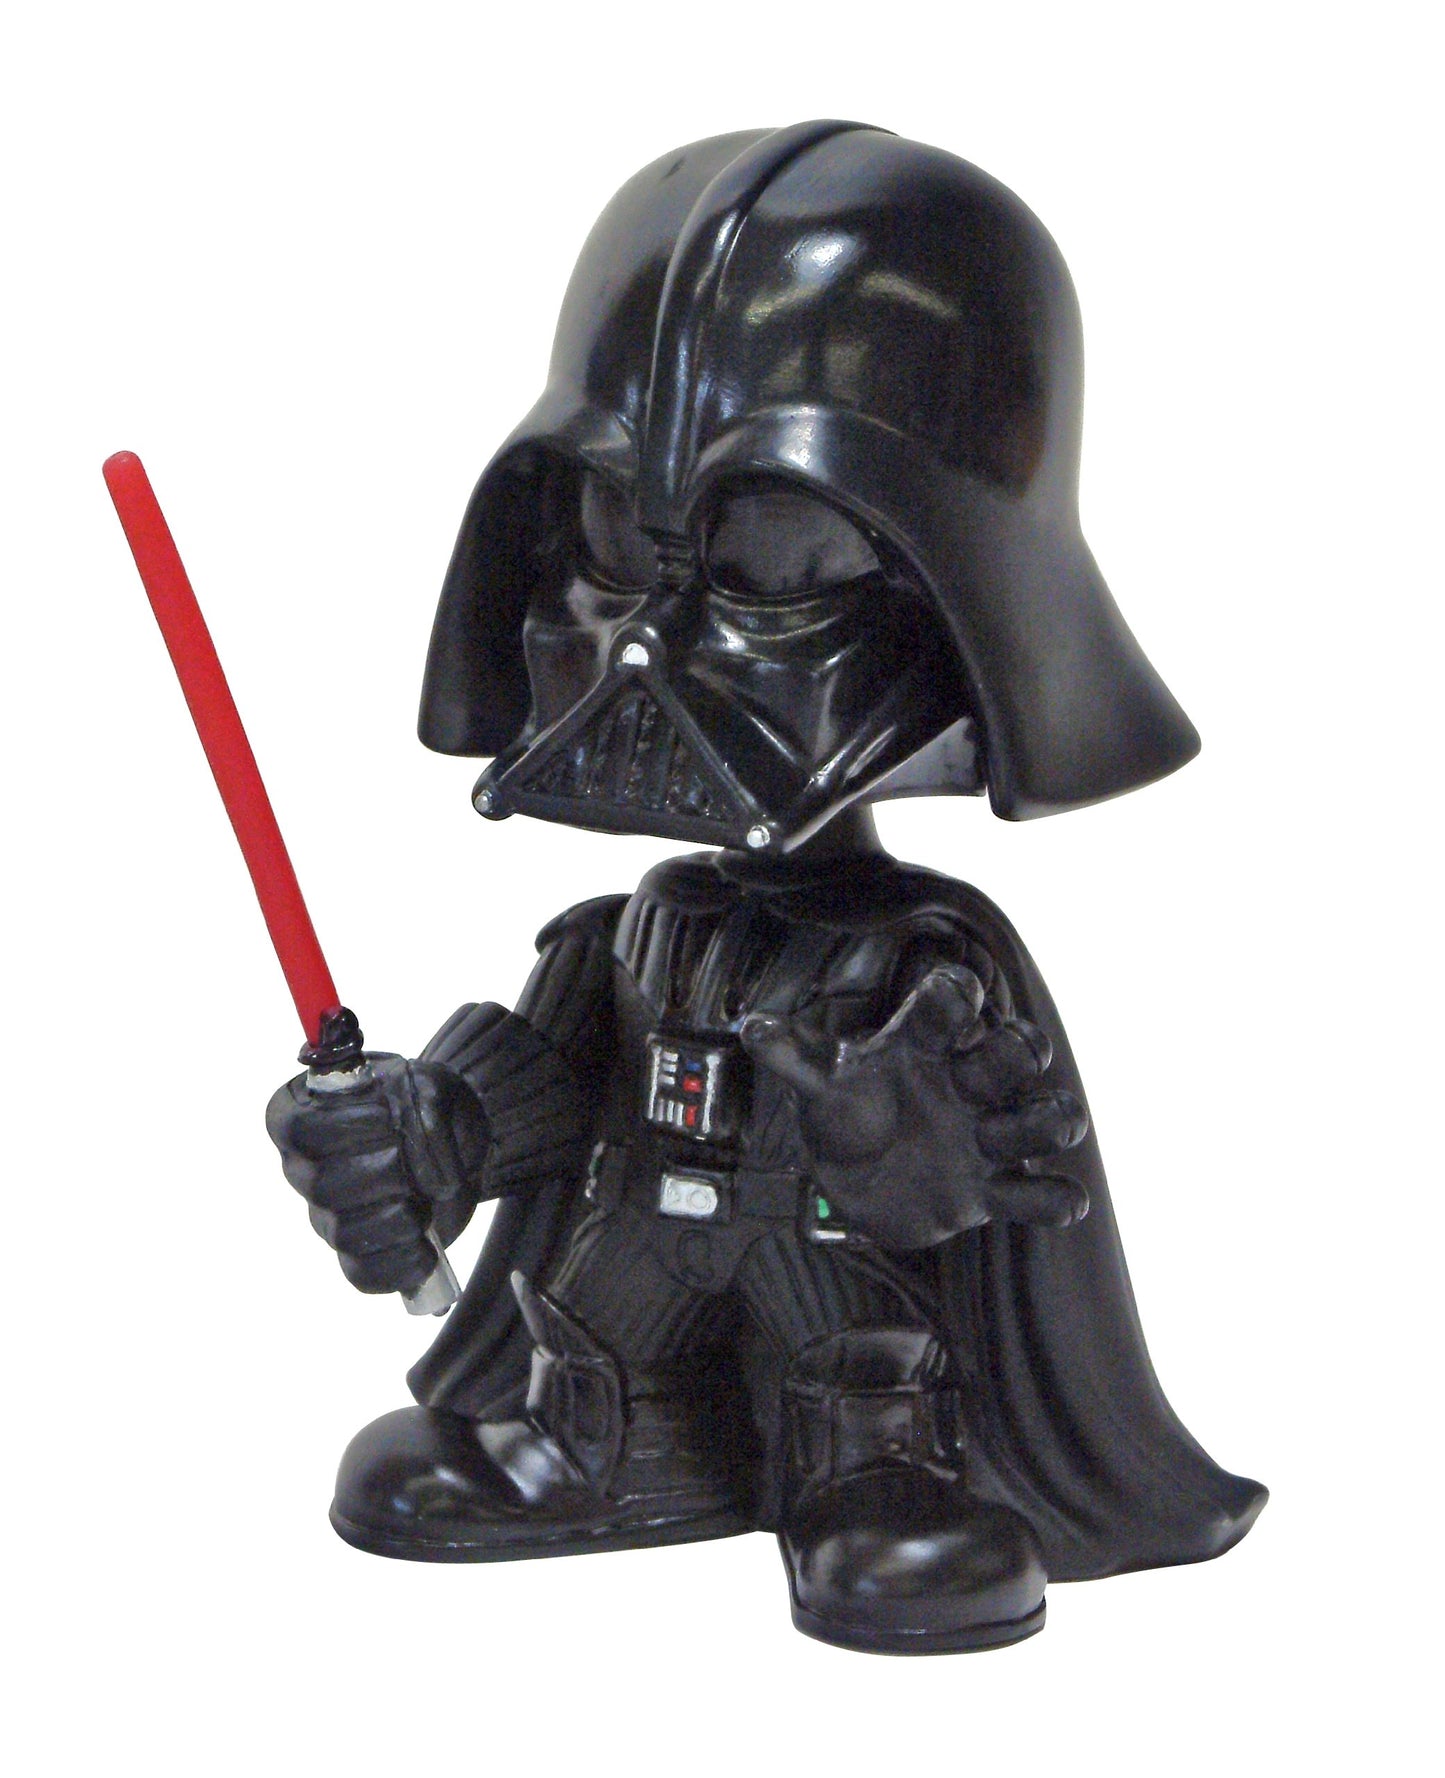 Funko Force Star Wars Darth Vader 2009 Bobblehead